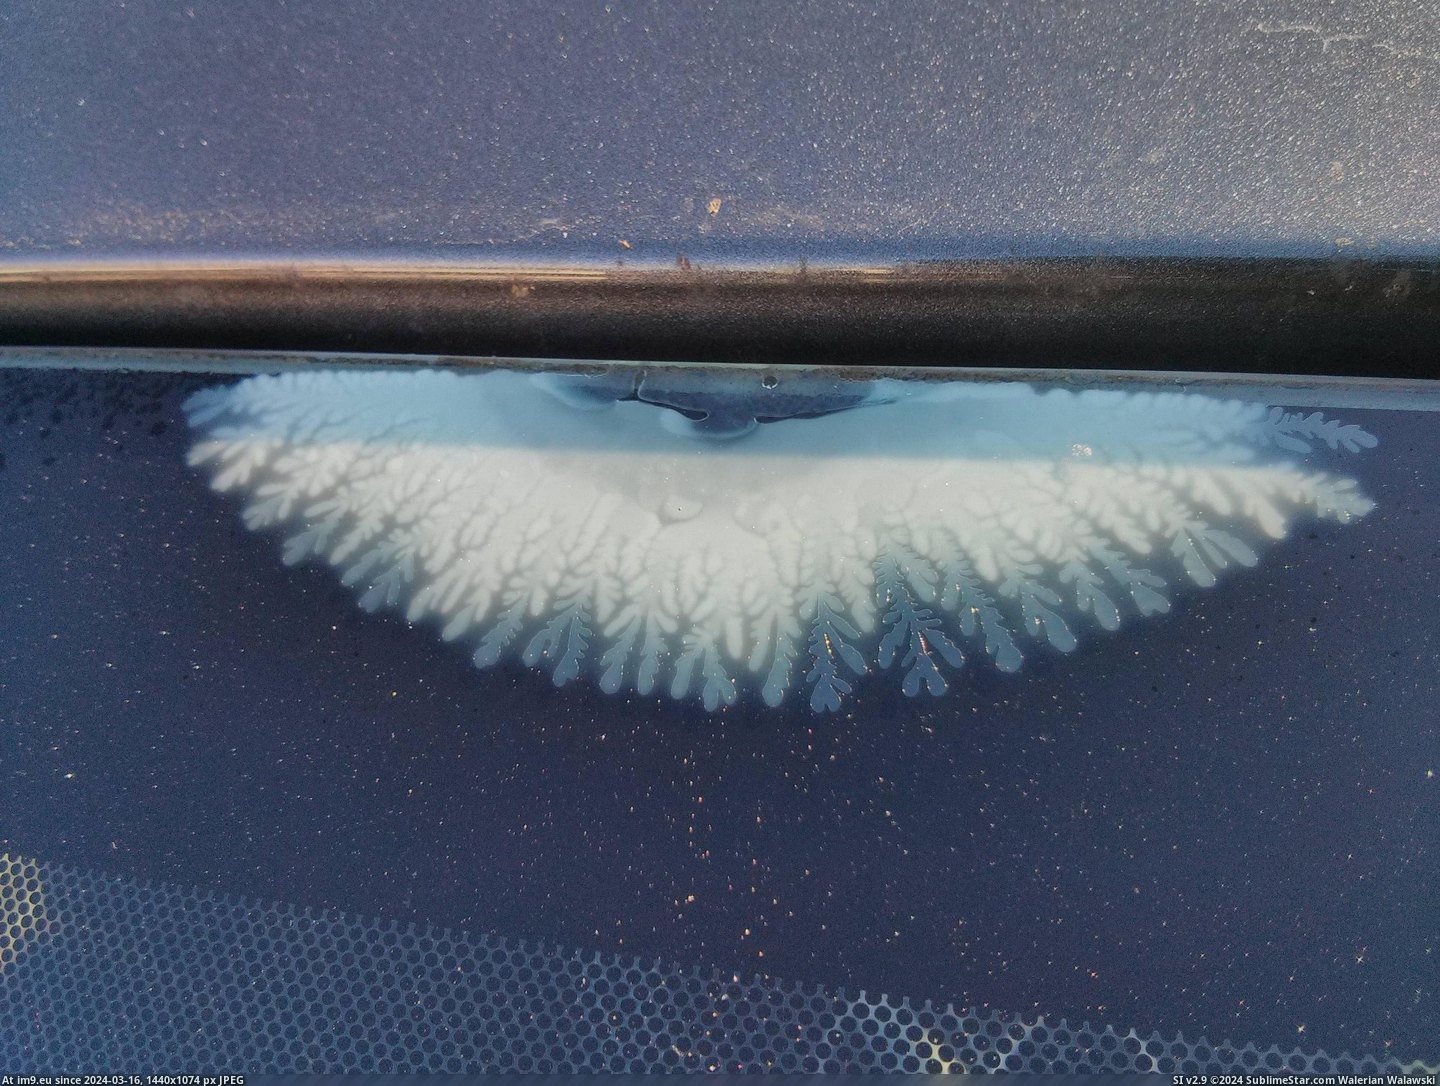 #Pattern #Delaminating #Windshield [Mildlyinteresting] This windshield is delaminating in a pattern. Pic. (Bild von album My r/MILDLYINTERESTING favs))